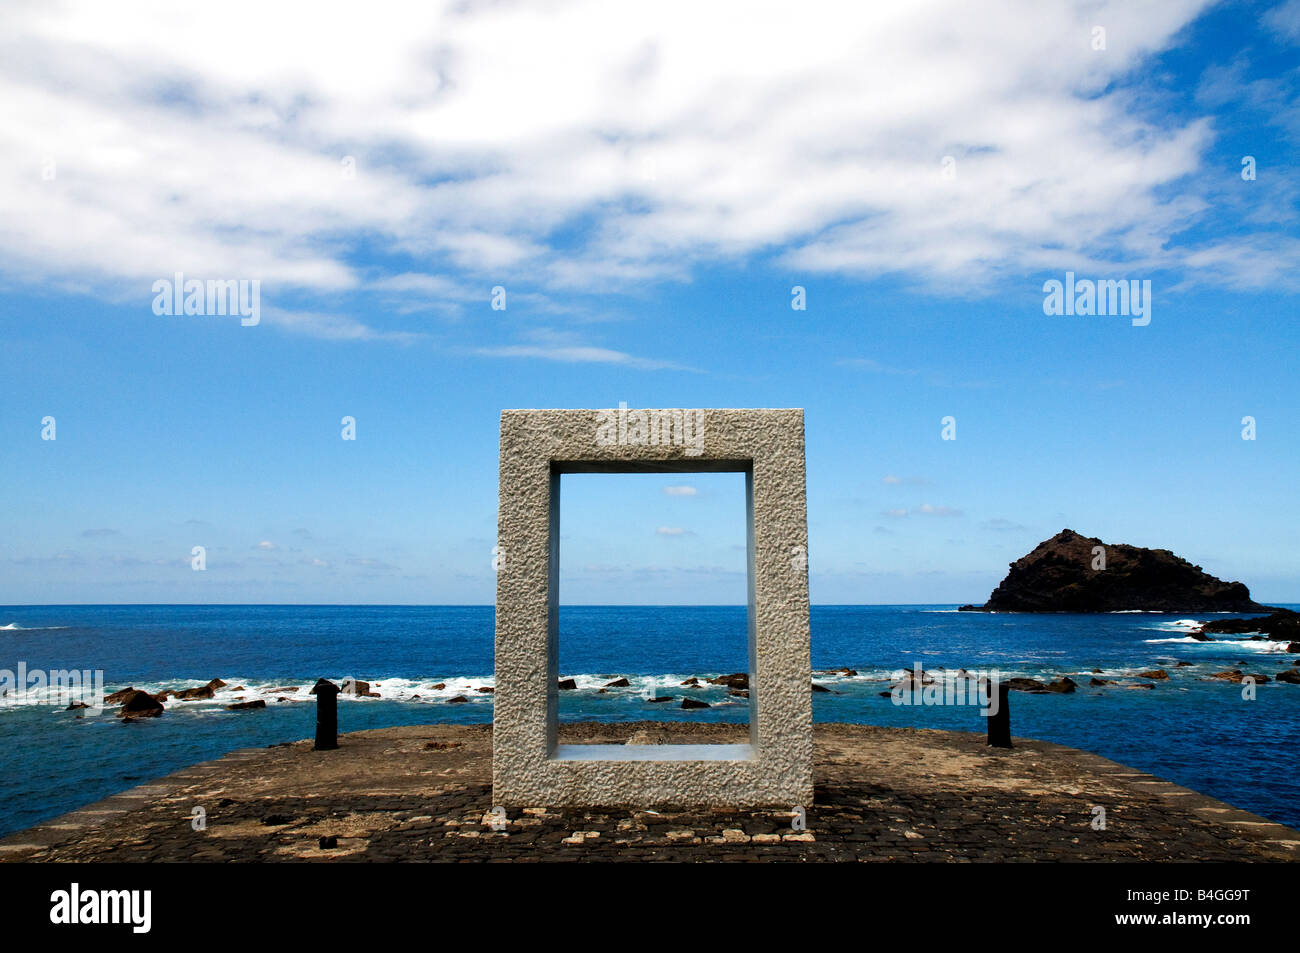 Tensei Tenmoku (Door without Door) by japanese artist Kan Yasuda in Garachico, Tenerife, Canary Islands, Spain Stock Photo